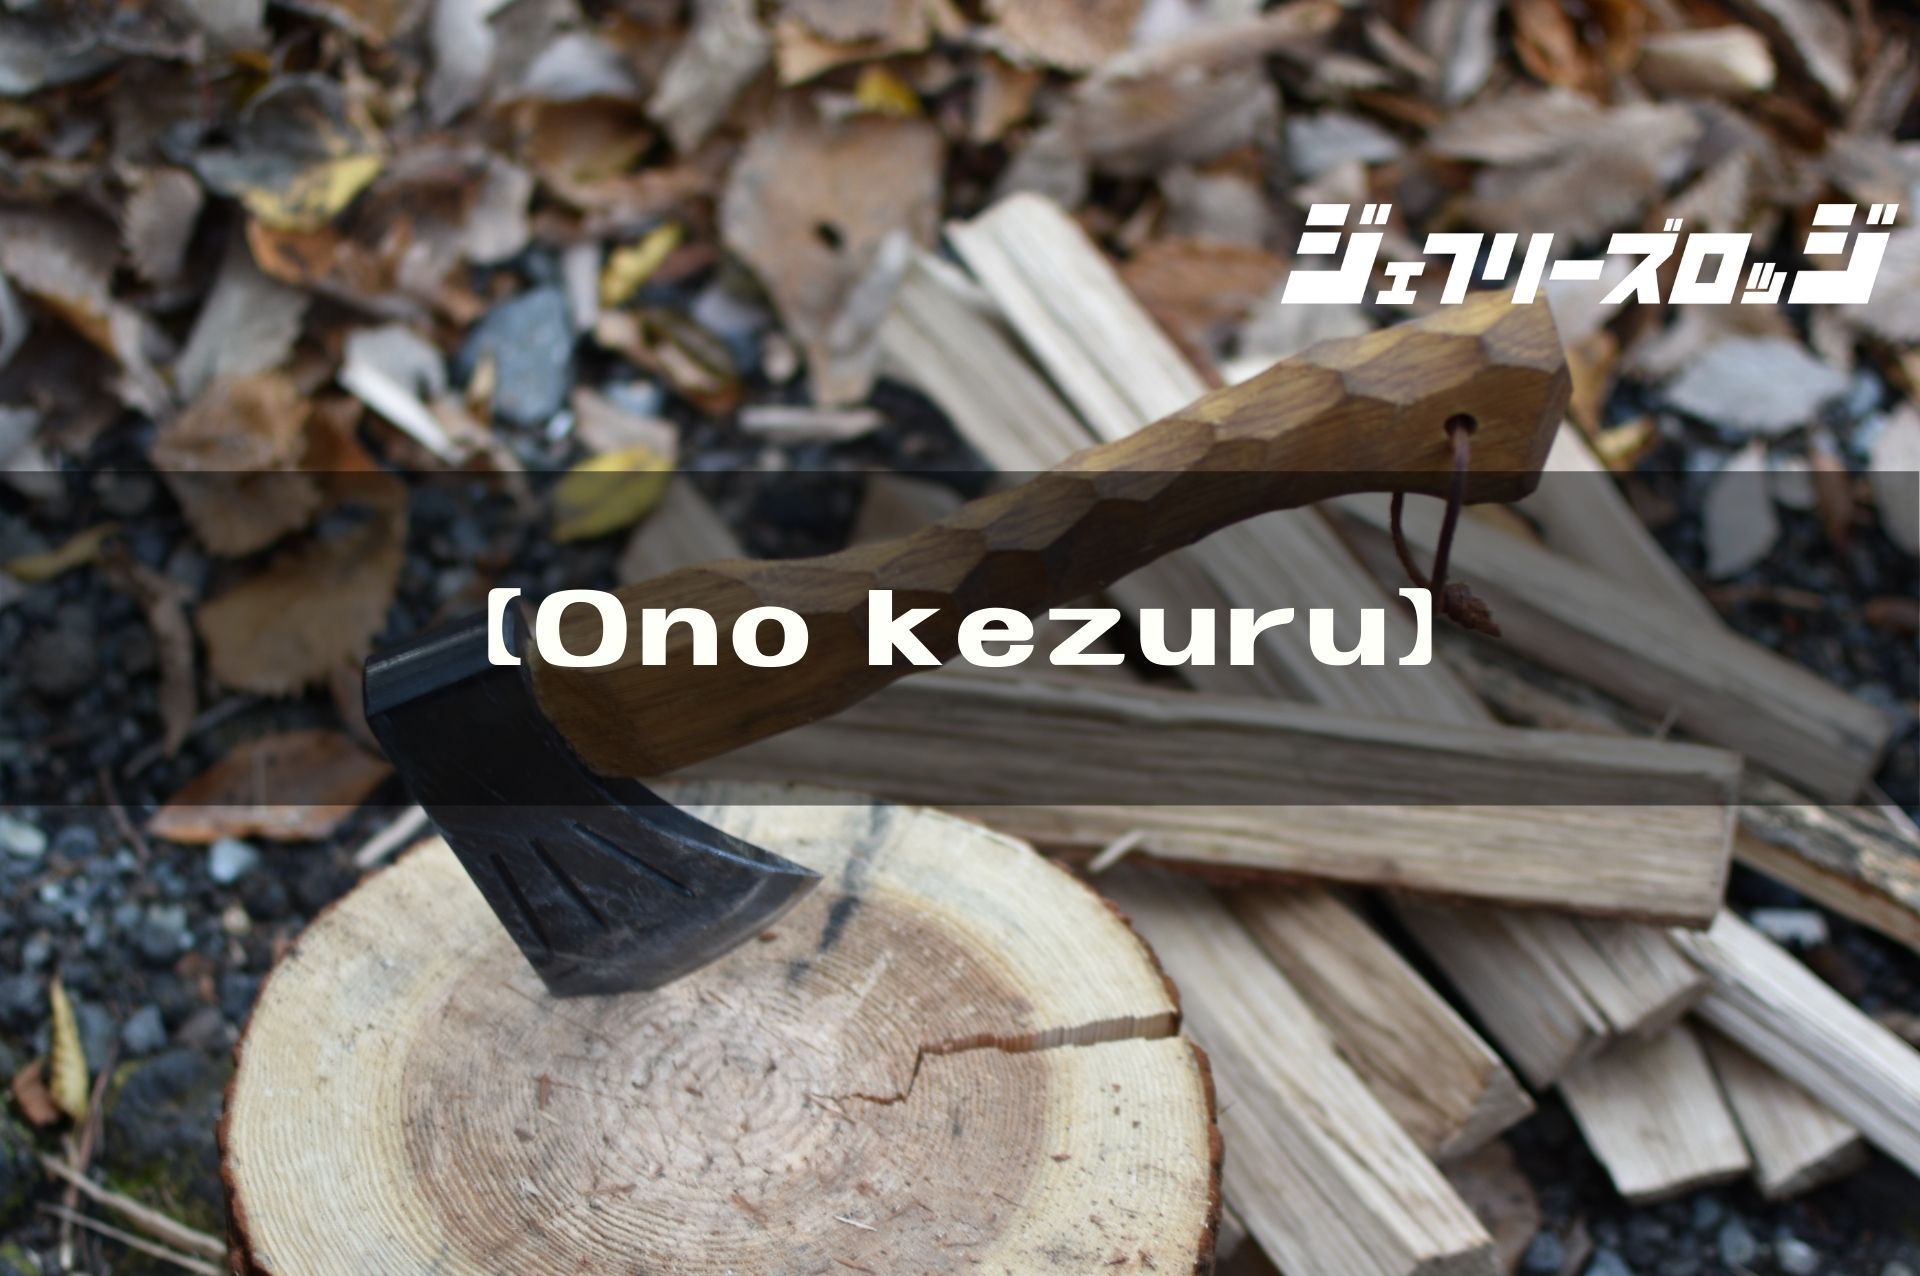 Ono kezuru】 唯一無二な存在感が漂う手斧 by neru design works x ...